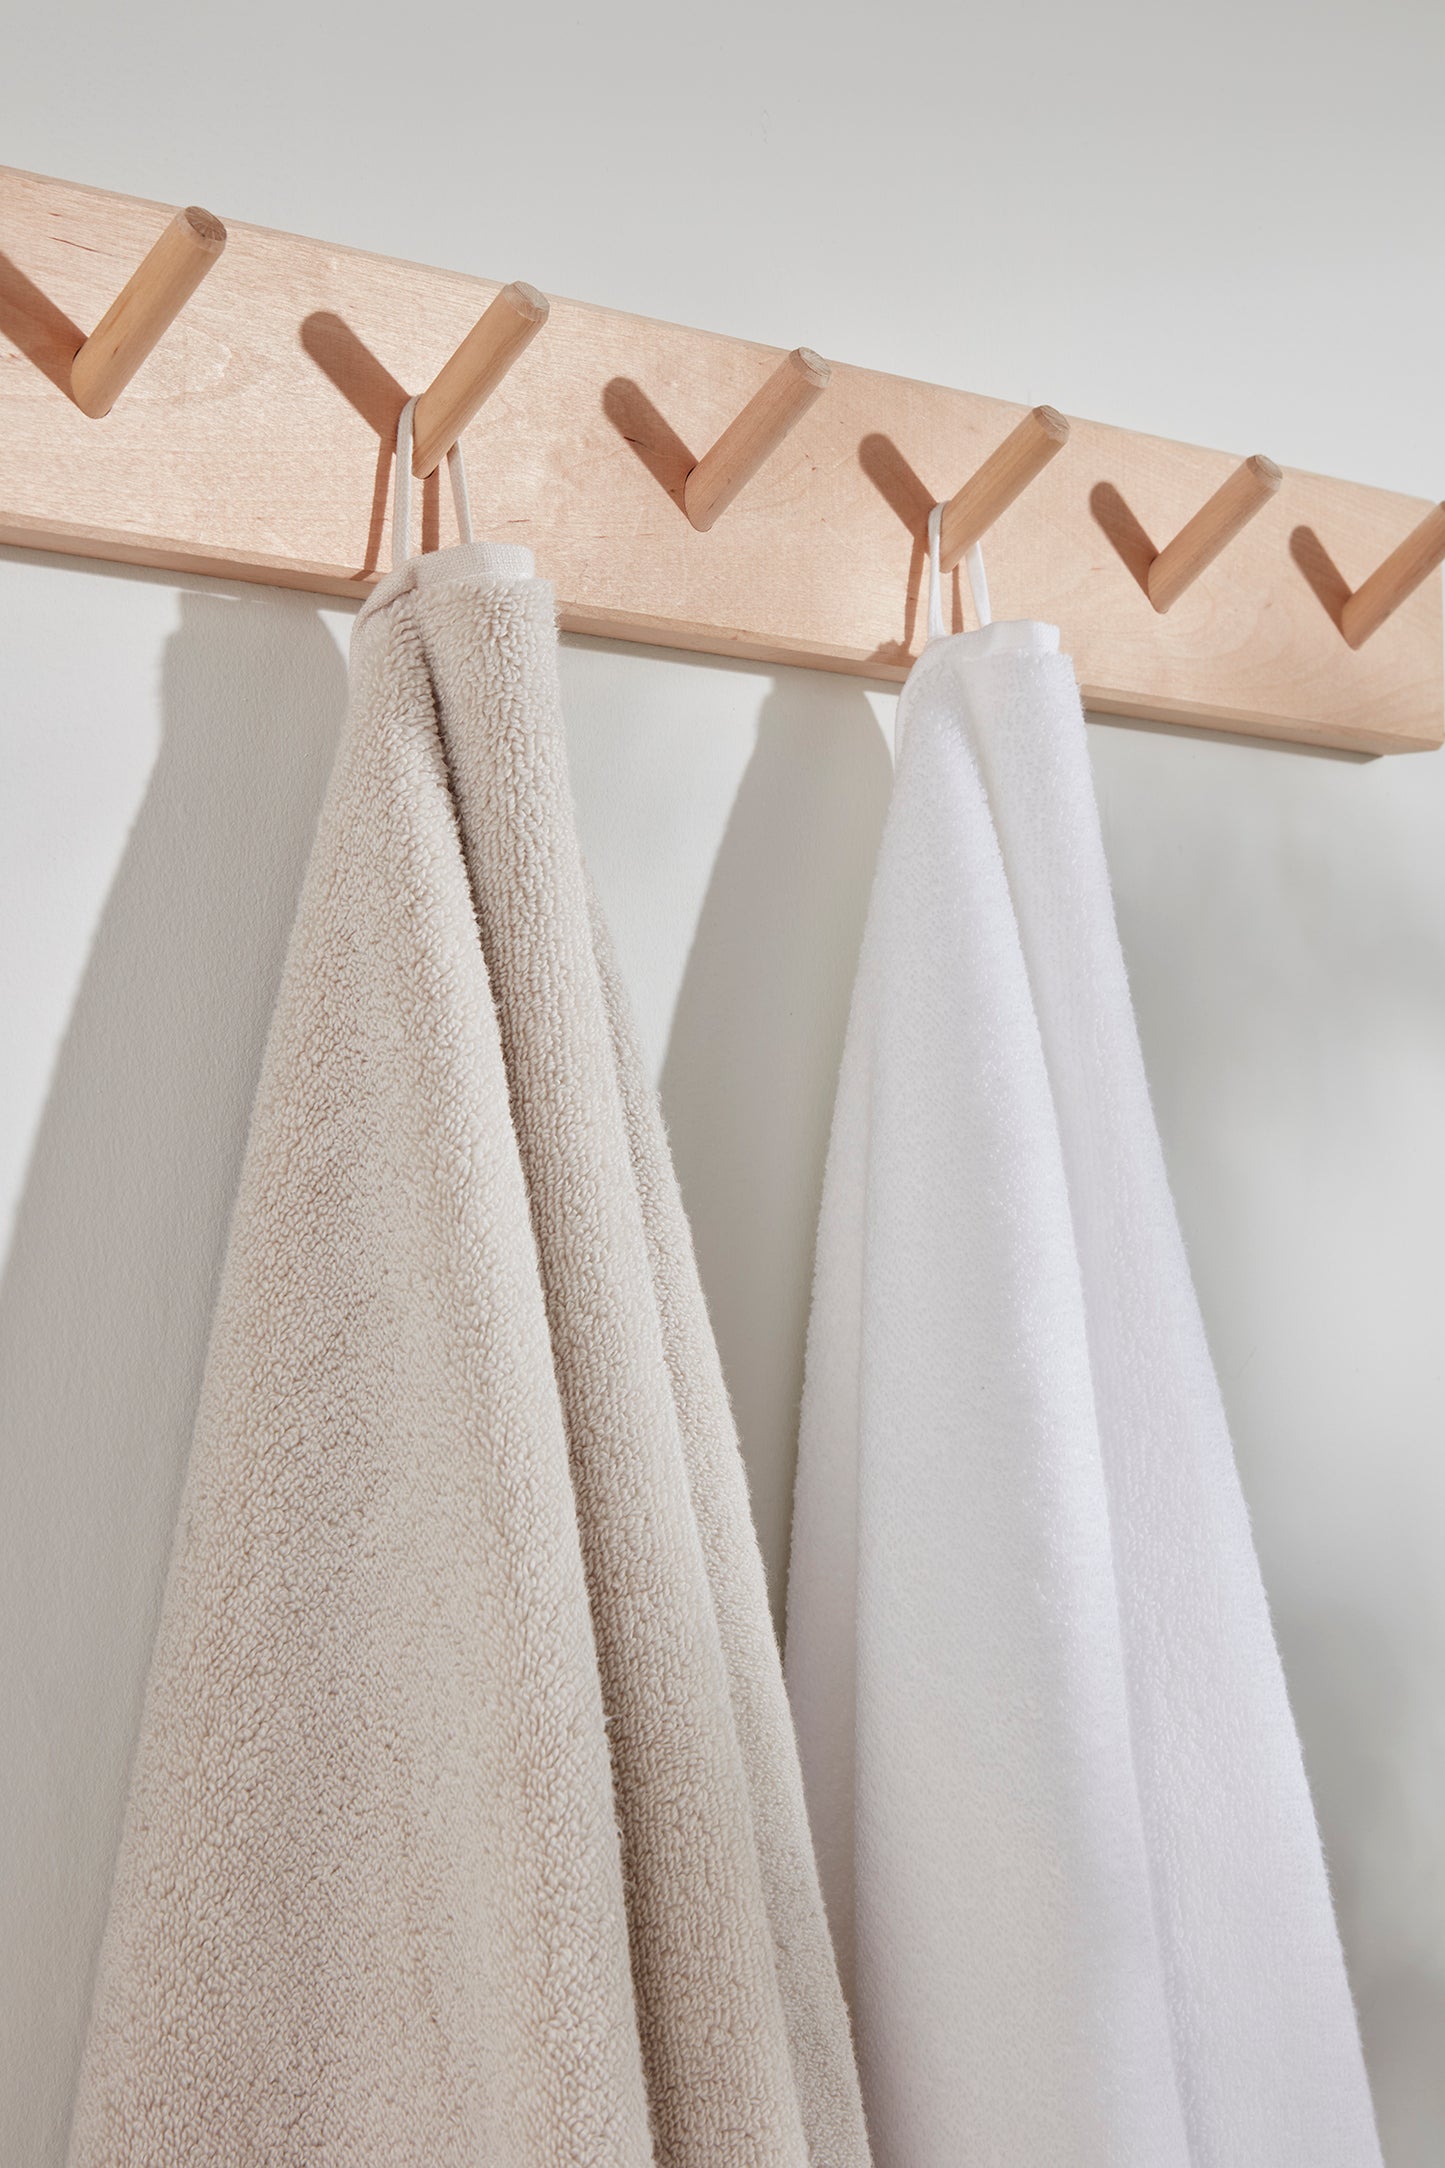 
                  
                    Bamboo Towel Bale in Light Grey
                  
                